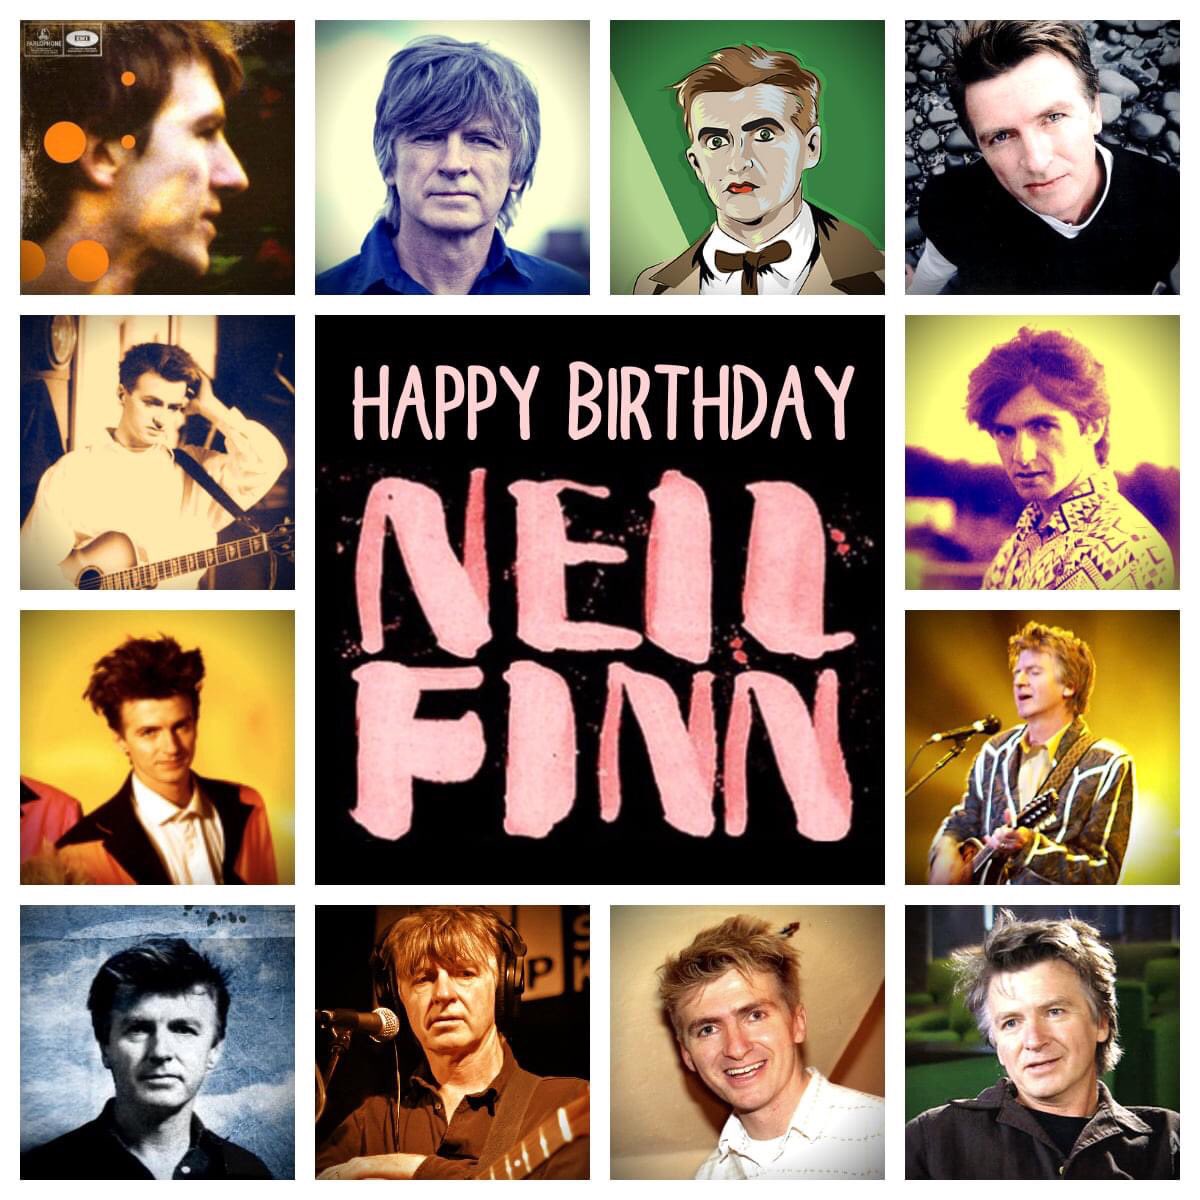 Happy birthday to crowded houses Neil Finn 